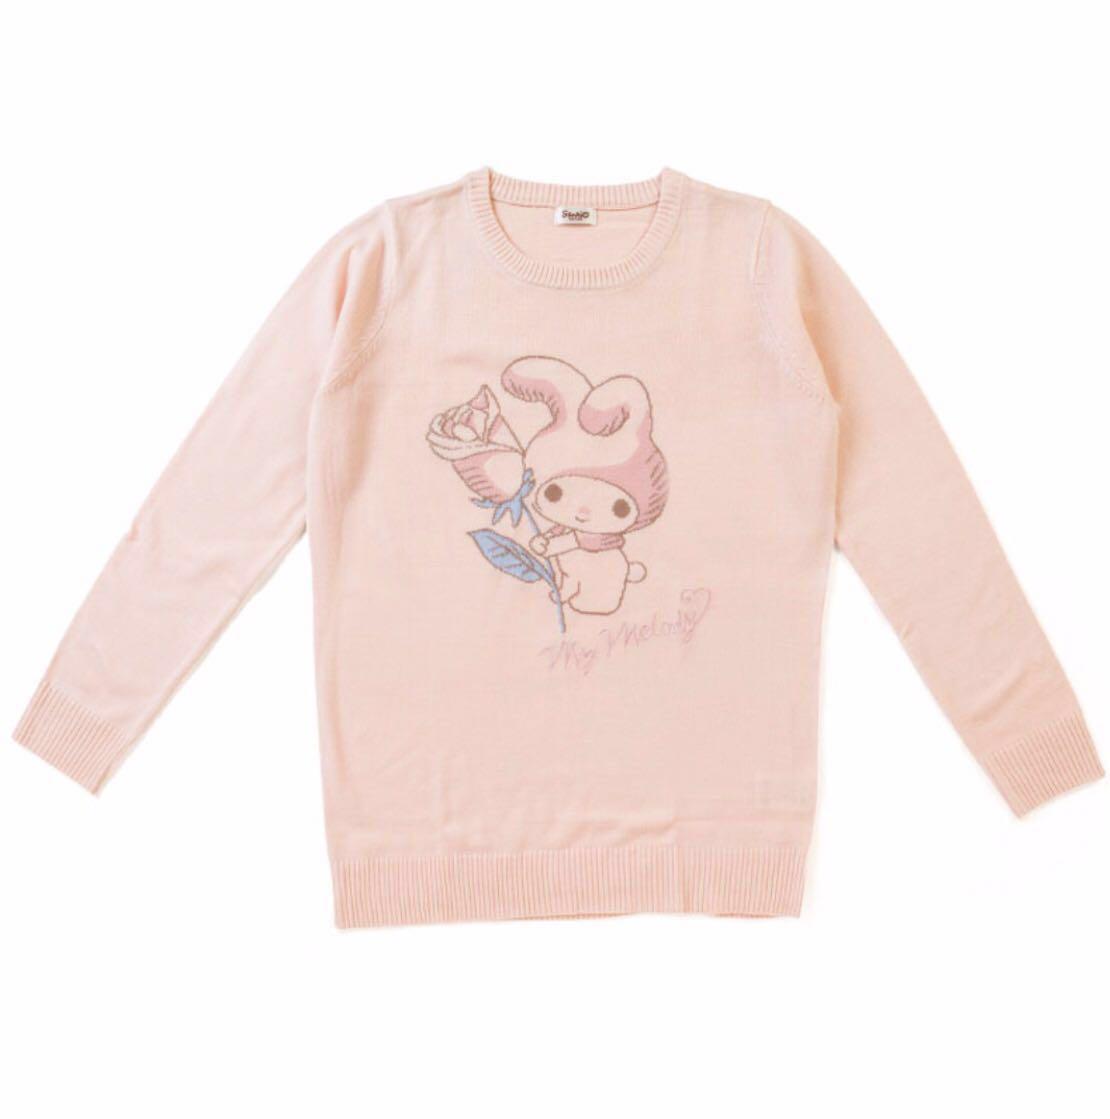 Japan Sanrio My Melody Knitted Sweater, Babies & Kids, Babies & Kids ...